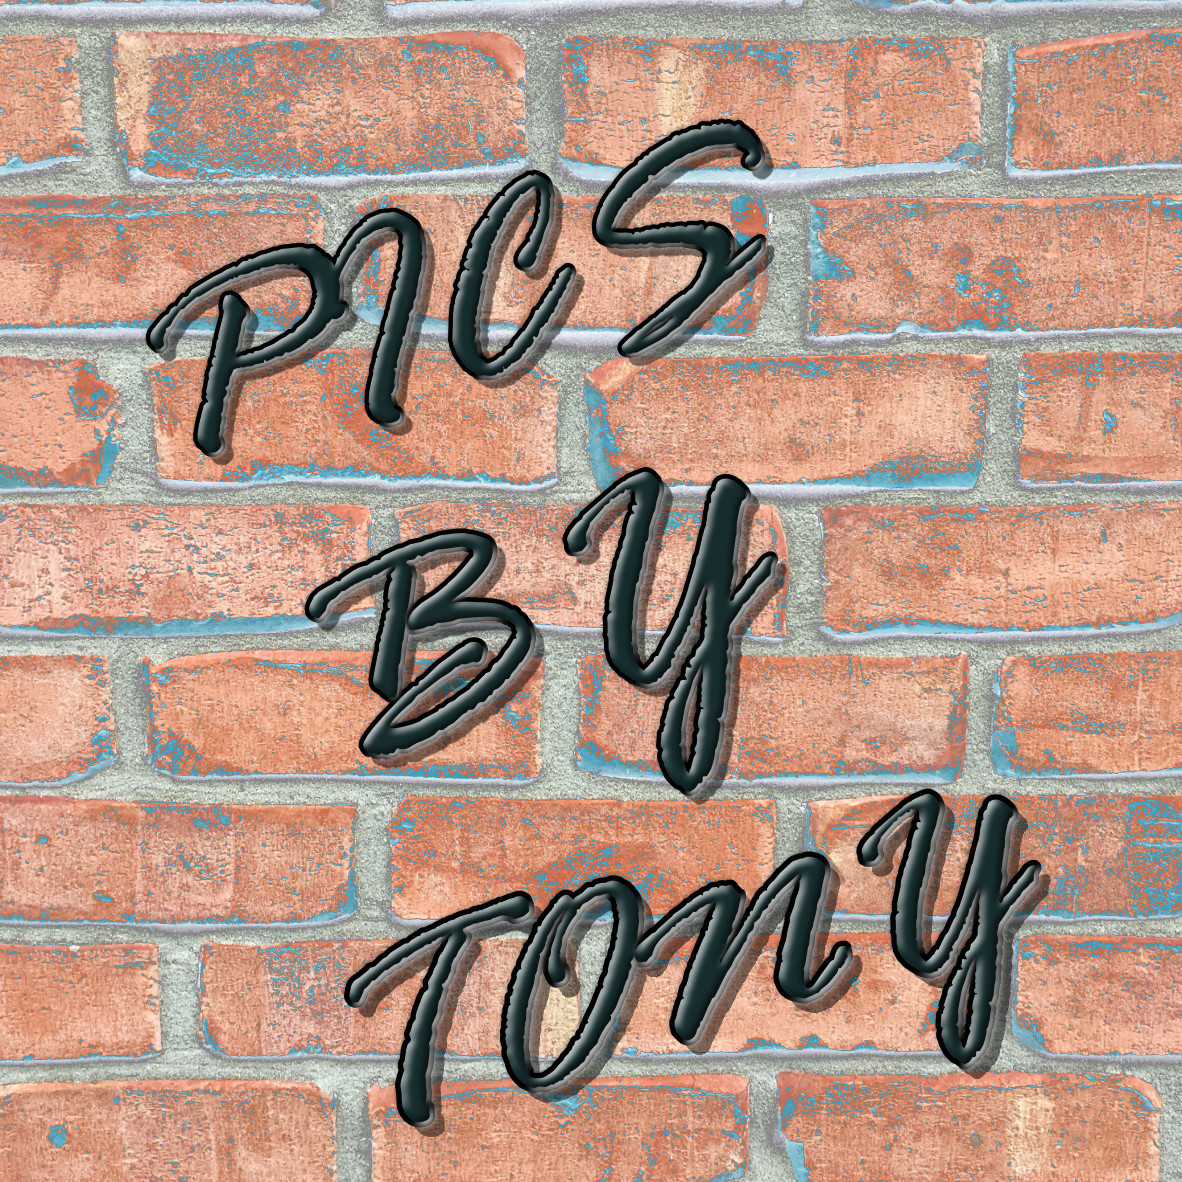 PICS BY TONY - Artist Website